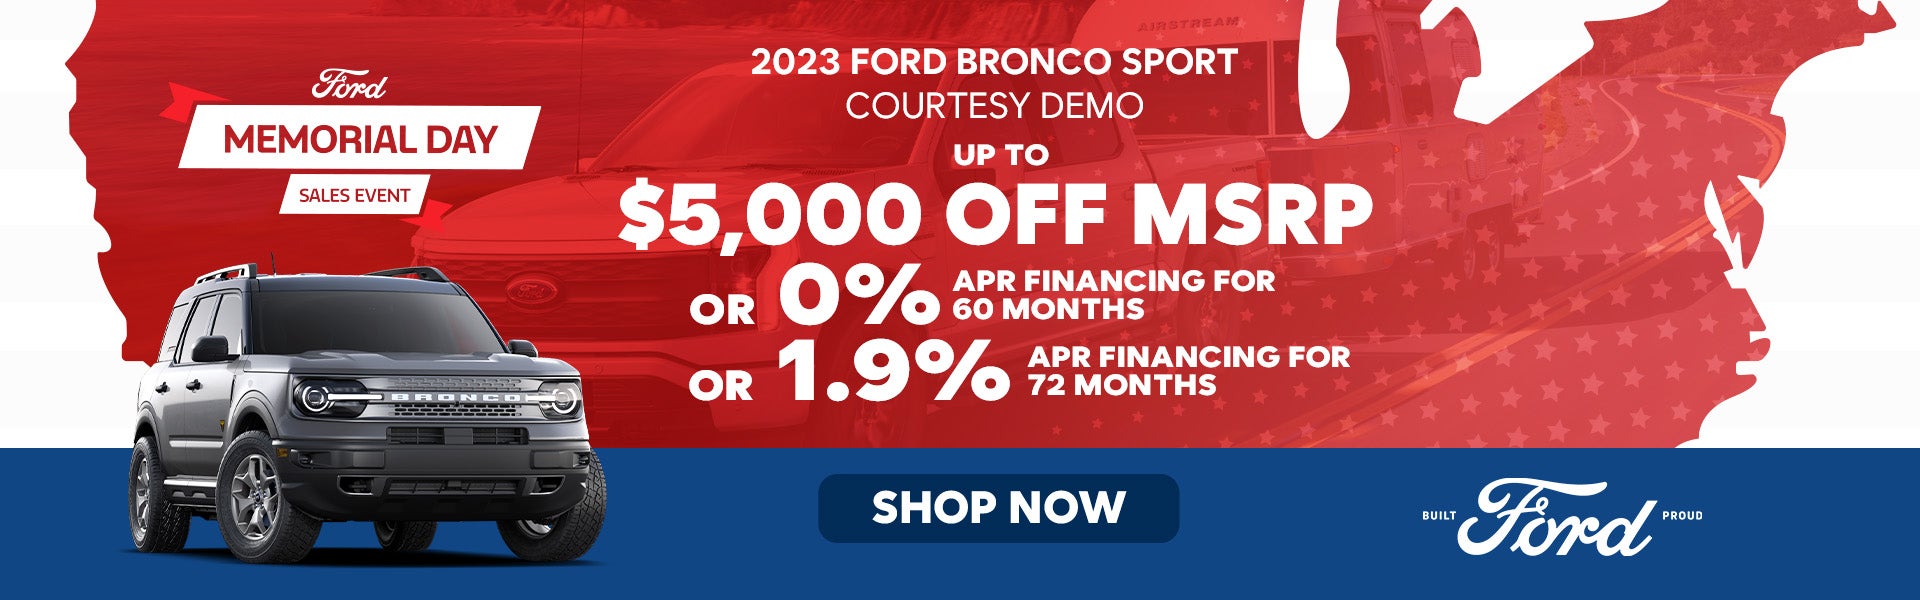 2023 Ford Bronco Sport Courtesy Demo